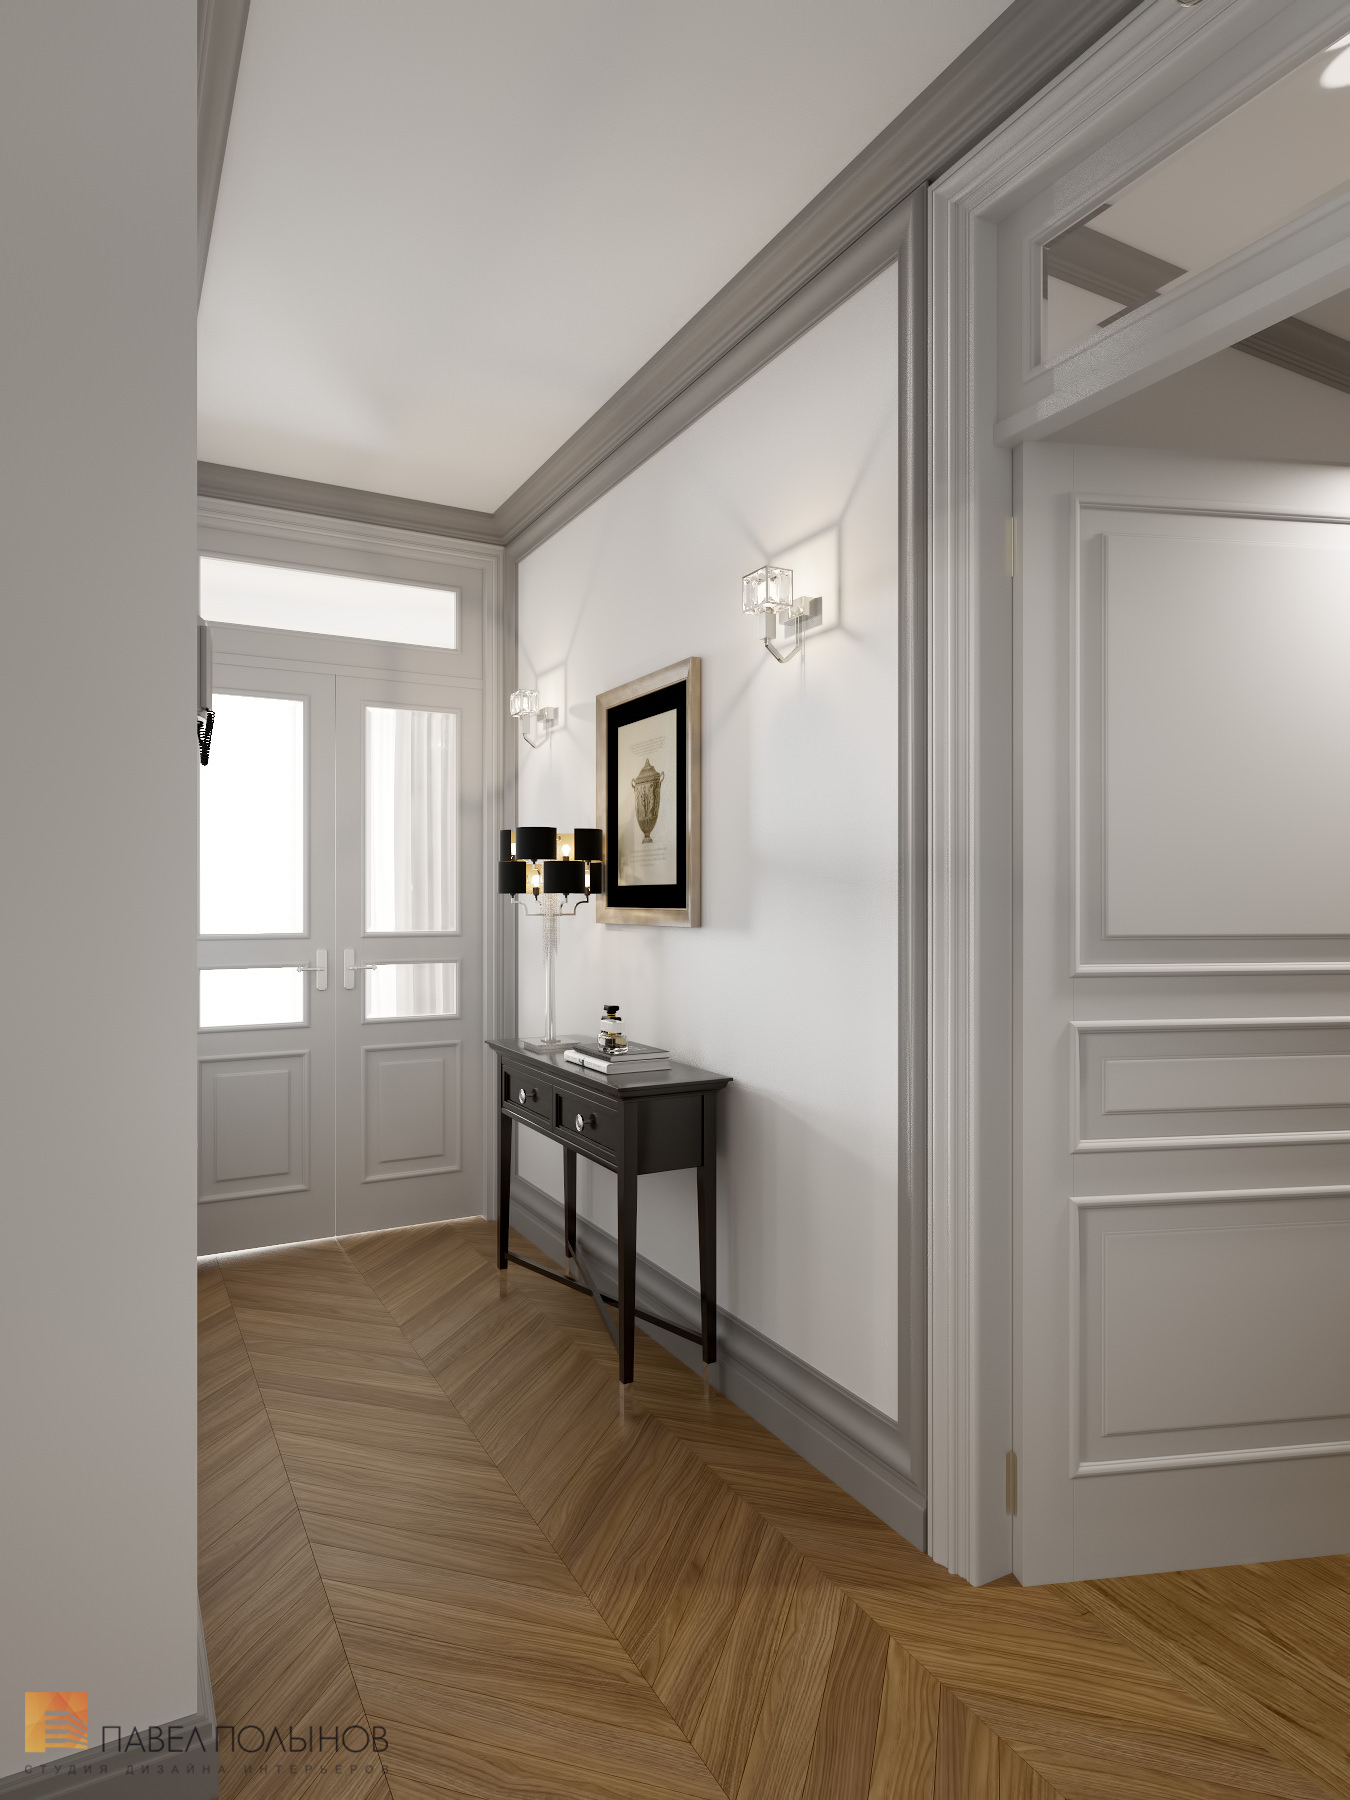 Фото дизайн коридора из проекта «Интерьер квартиры в стиле неоклассики, ЖК «Парадный квартал», 190 кв.м.»